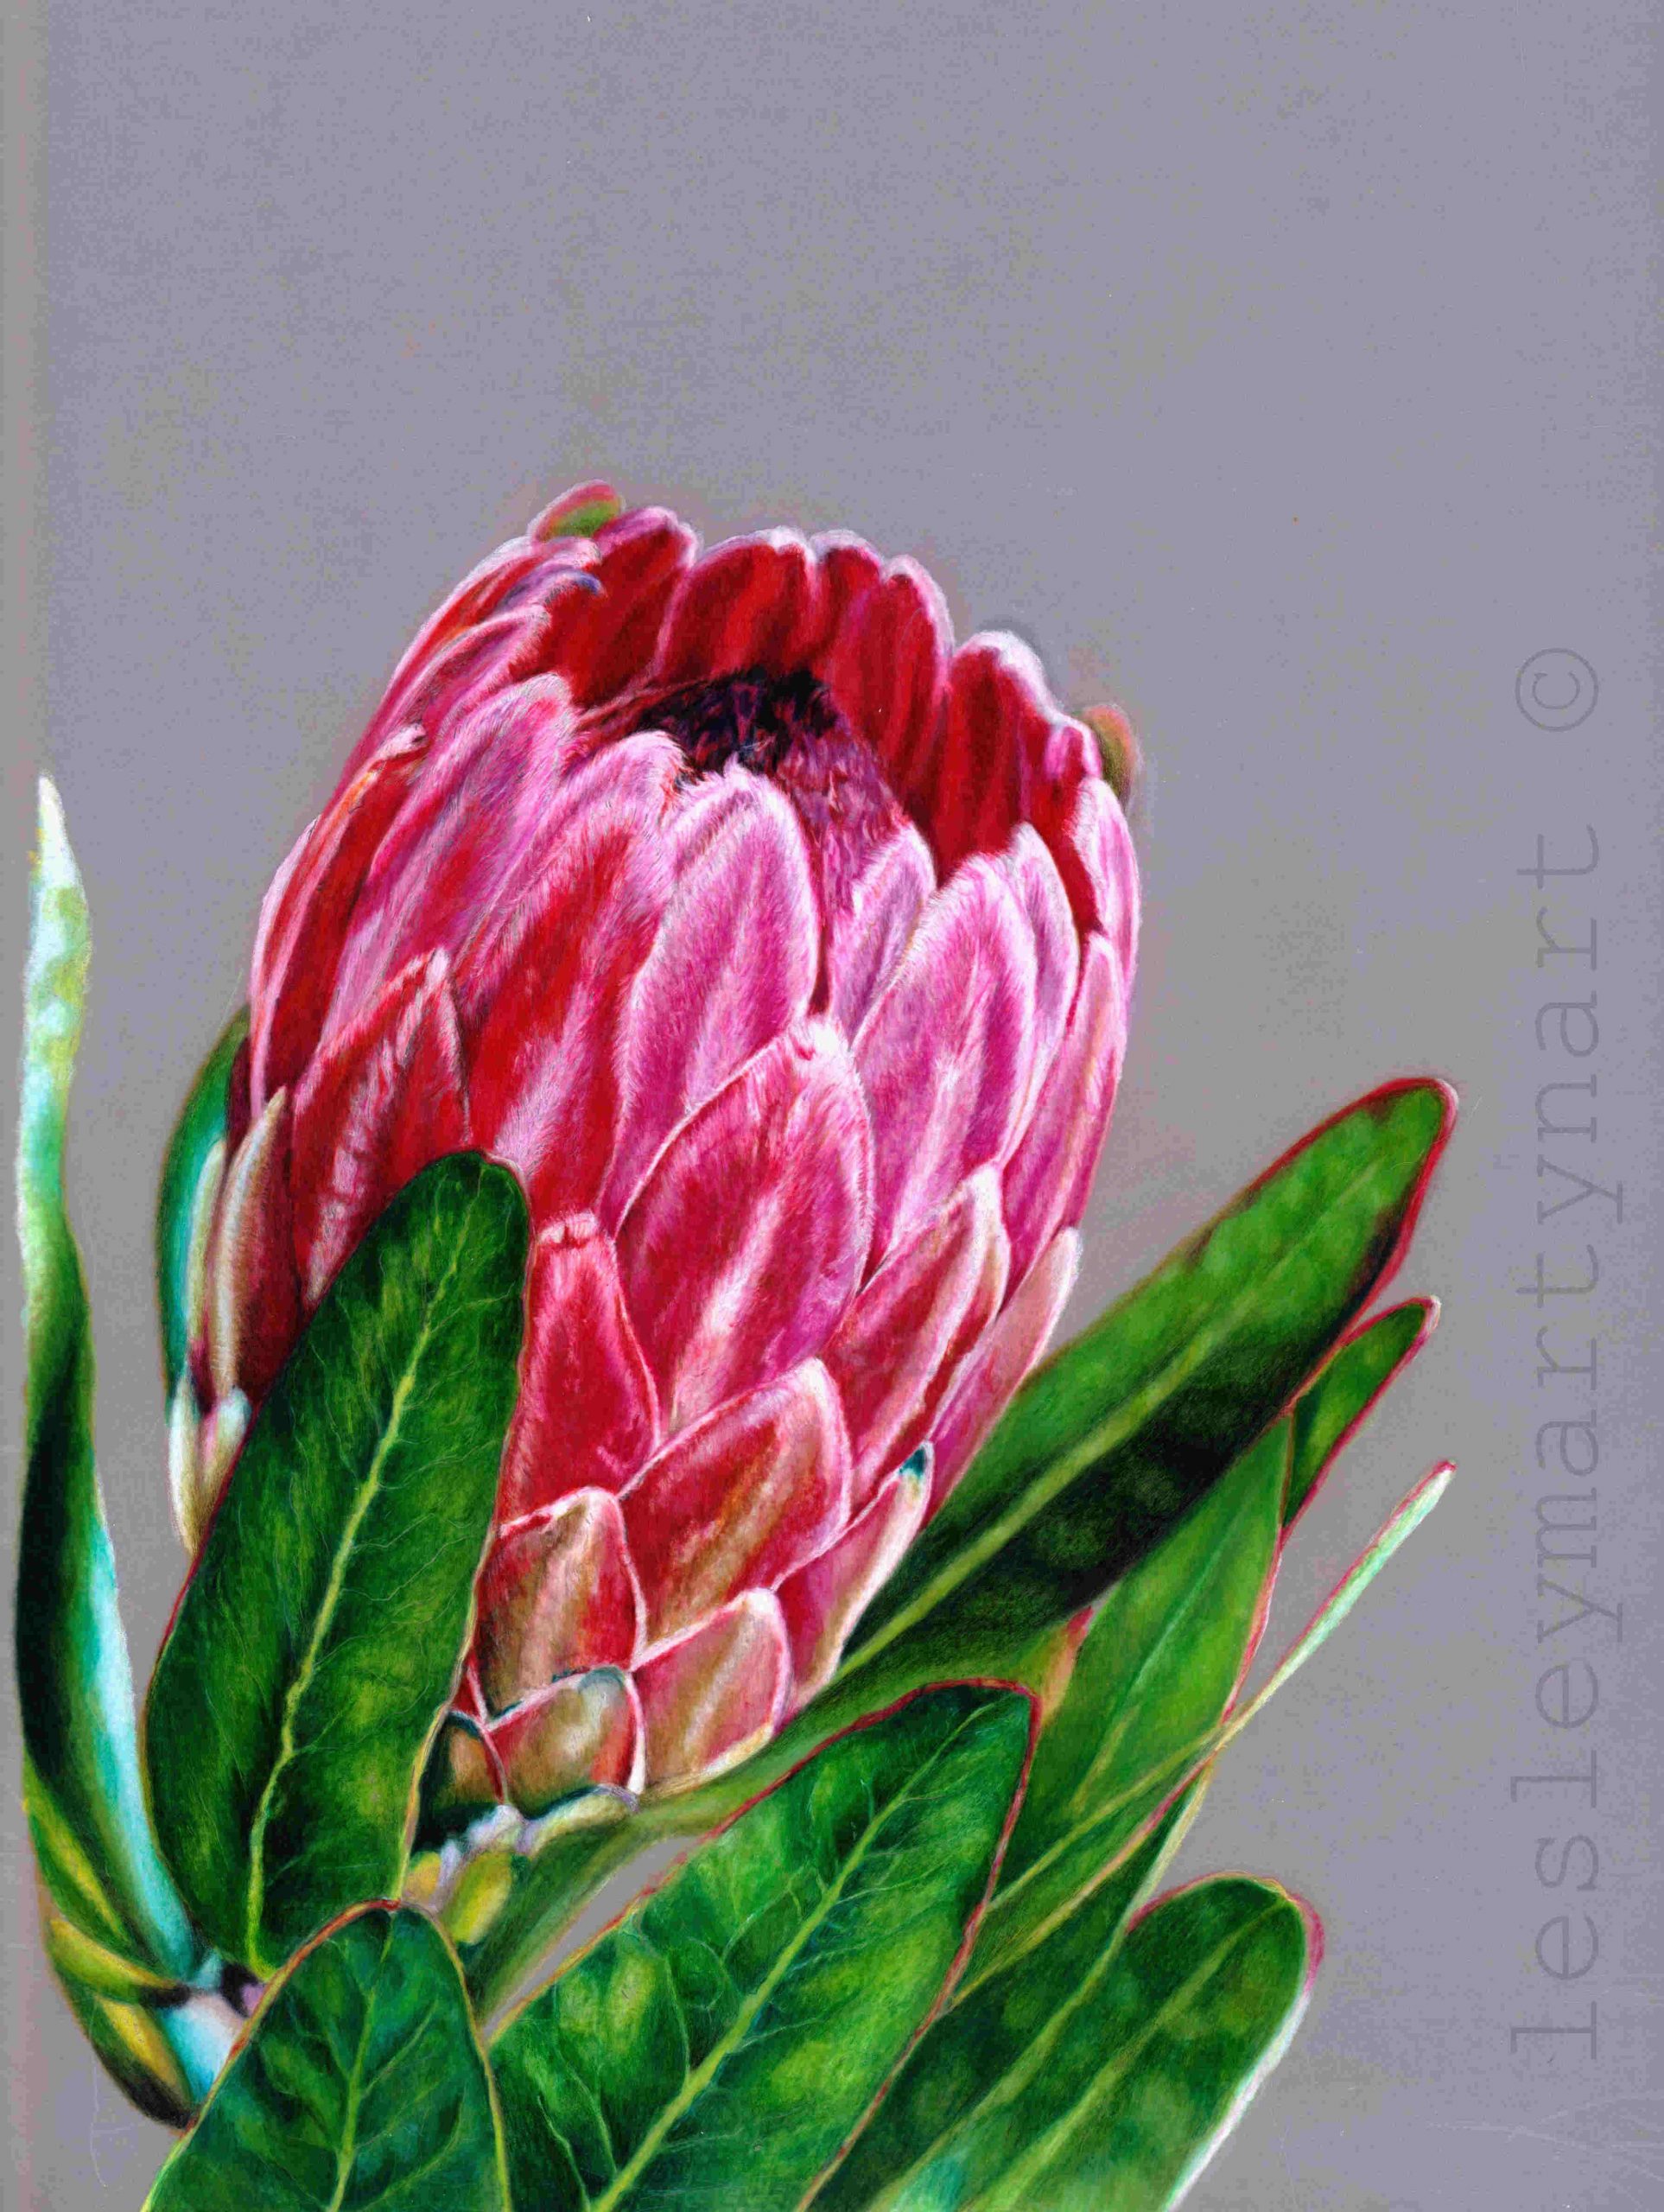 Lesley Martyn art of protea plant 